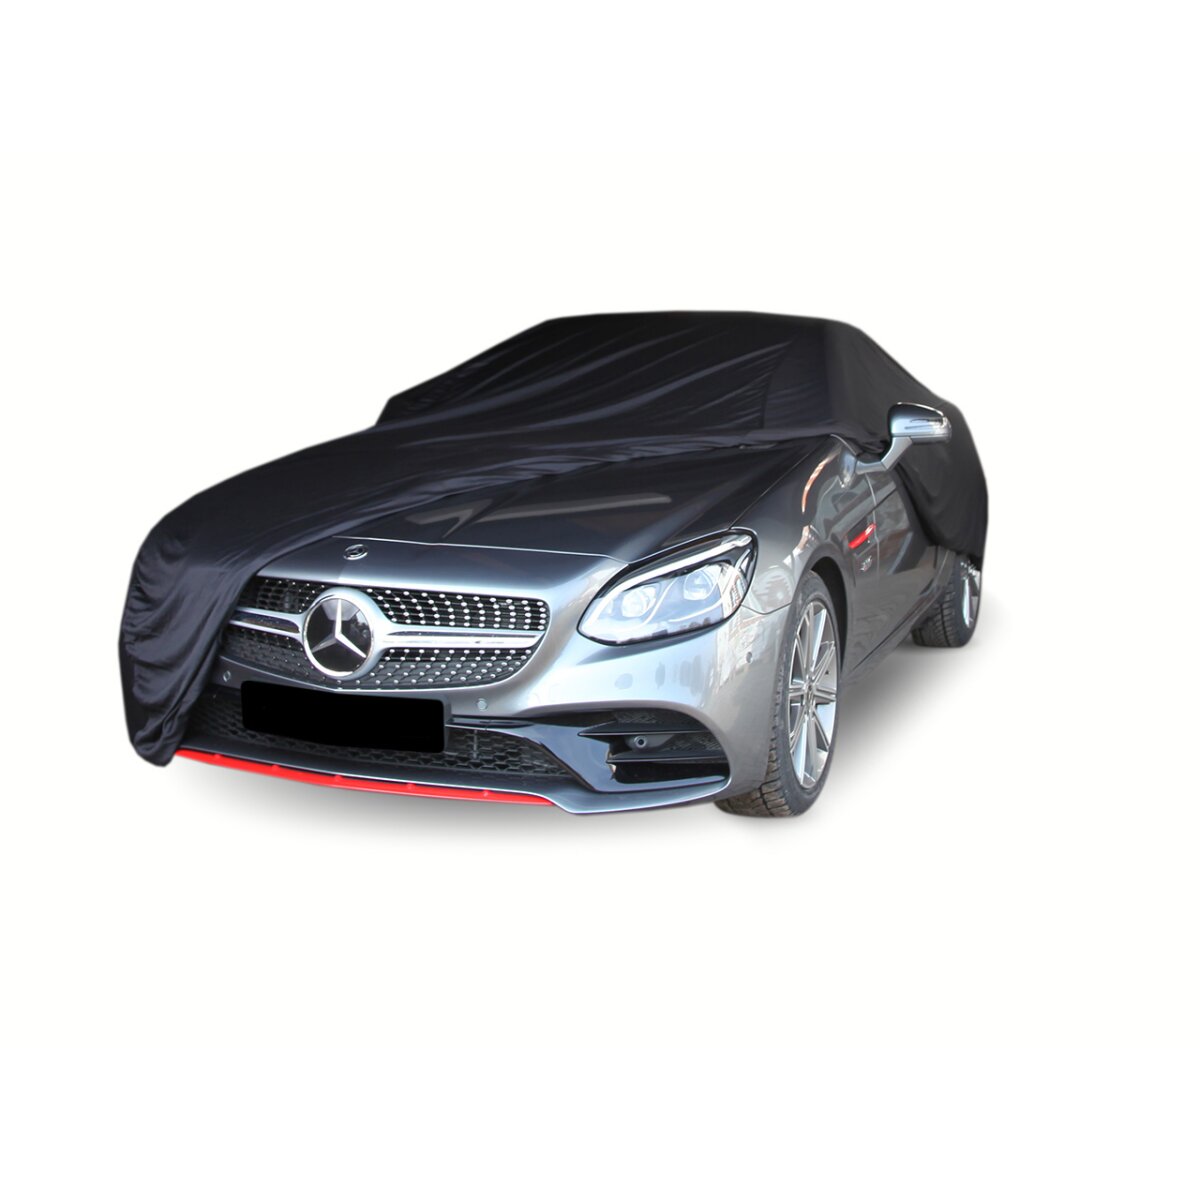 https://www.autoabdeckung.com/media/image/product/12260/lg/autoabdeckung-soft-indoor-car-cover-fuer-audi-s3-limousine-8v.jpg